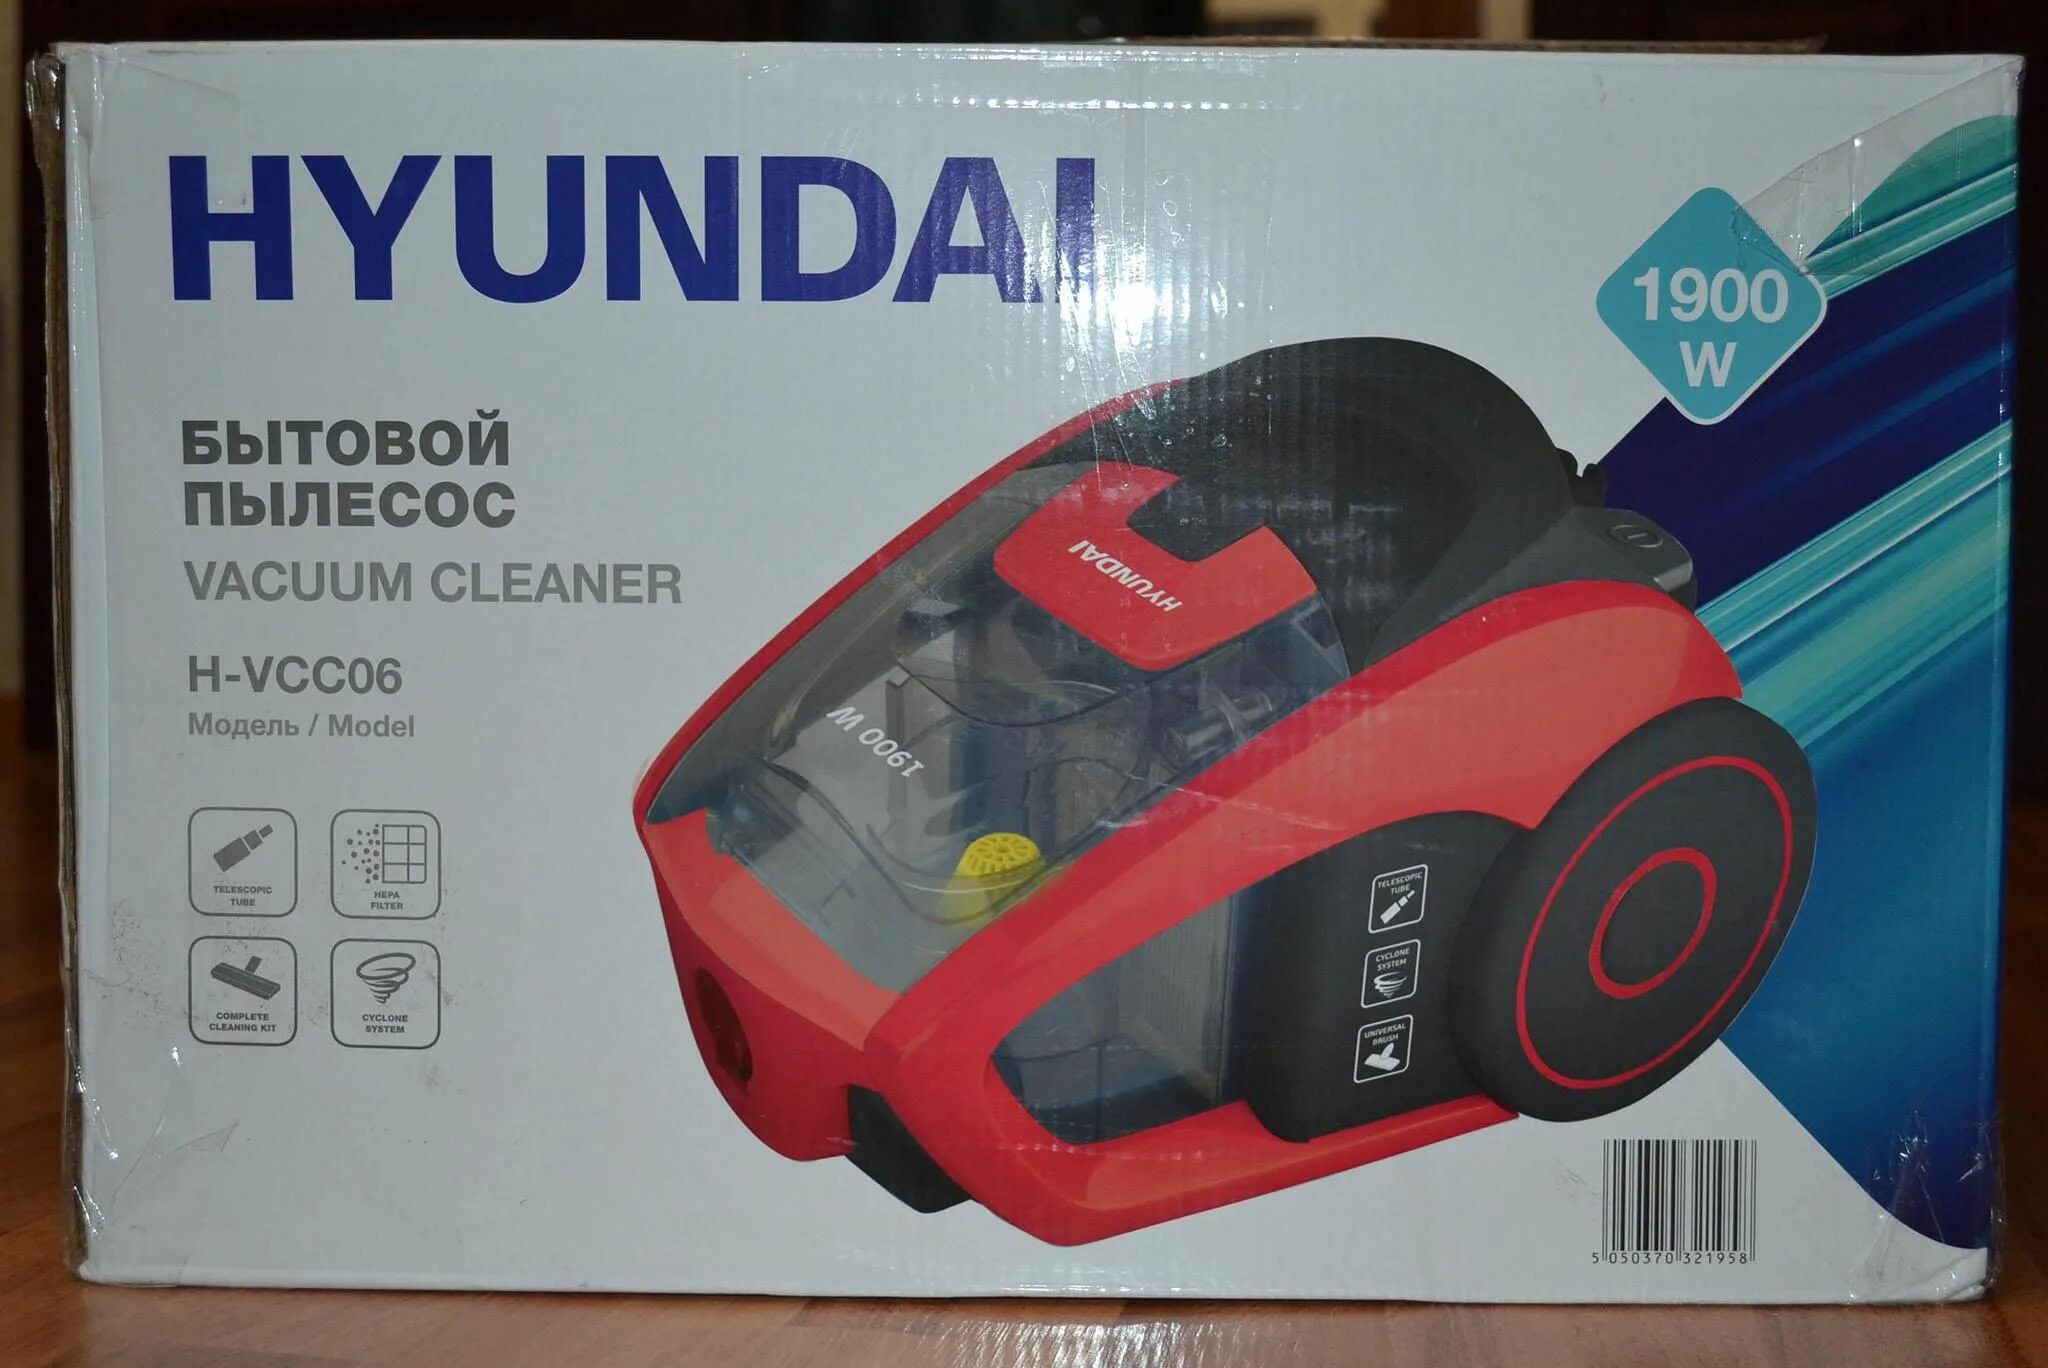 Пылесос hyundai hyv c3370 2400вт белый красный. Пылесос Hyundai vcc06 фильтр. Фильтр для пылесоса Hyundai h-vcc06. Пылесос Hyundai 1900w h-vcc06. Фильтр ДЛЯПЫЛЕСОС Hyundai h-vcc08.